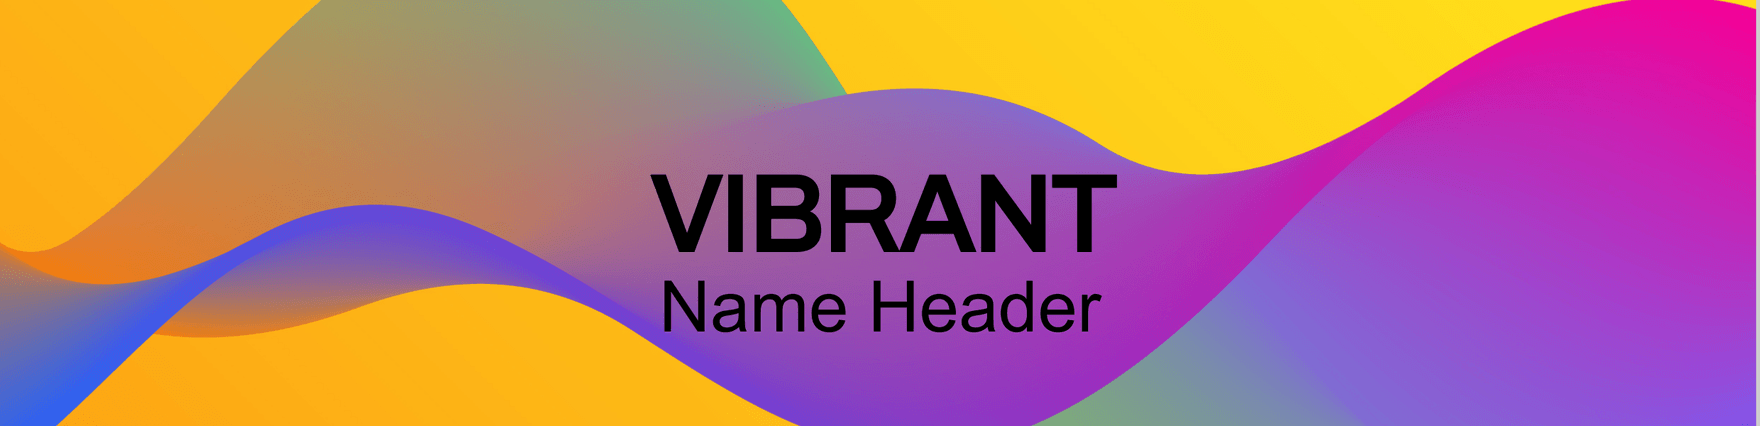 Vibrant Name Header Template